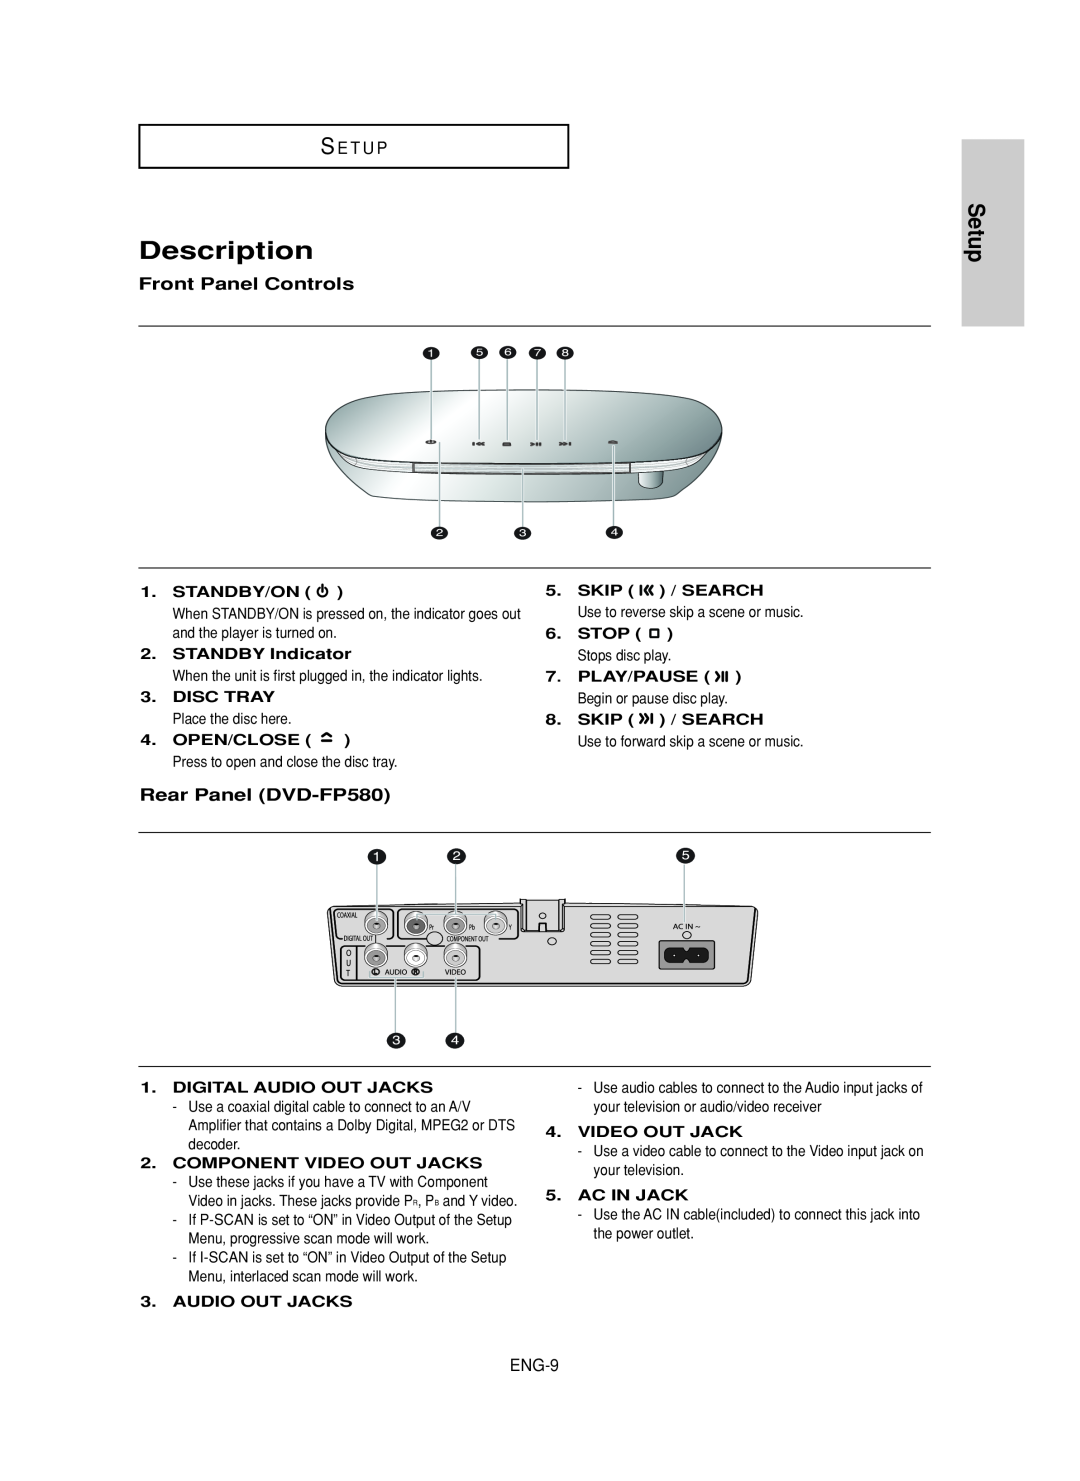 Samsung DVD-F1080 manual Description, Setup, S E T U P, Front Panel Controls, Rear Panel DVD-FP580, ENG-9 